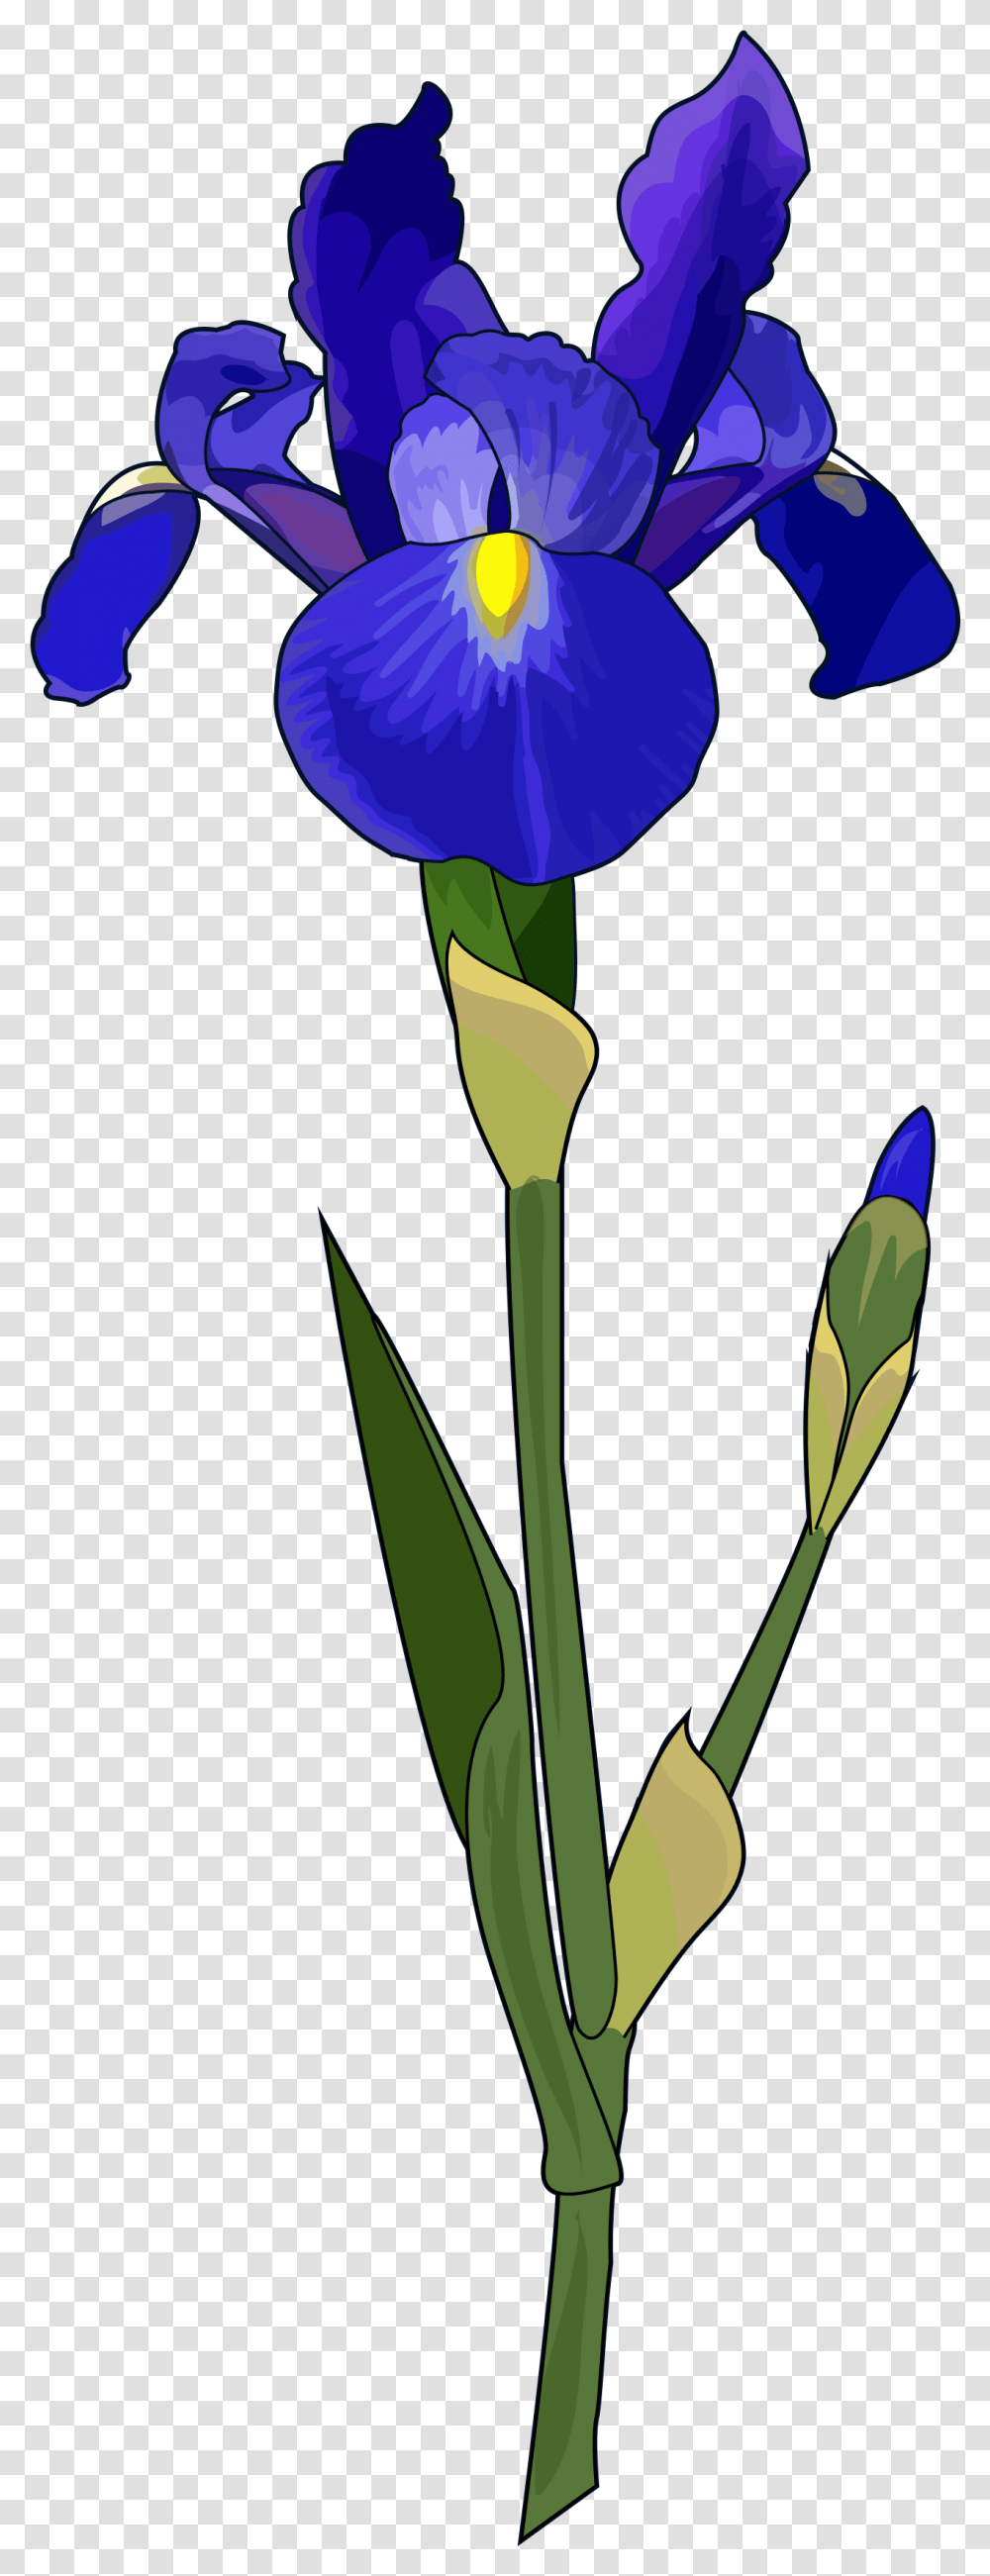 Blue Iris Flower Image Iris Flower, Plant, Blossom, Tulip, Petal Transparent Png